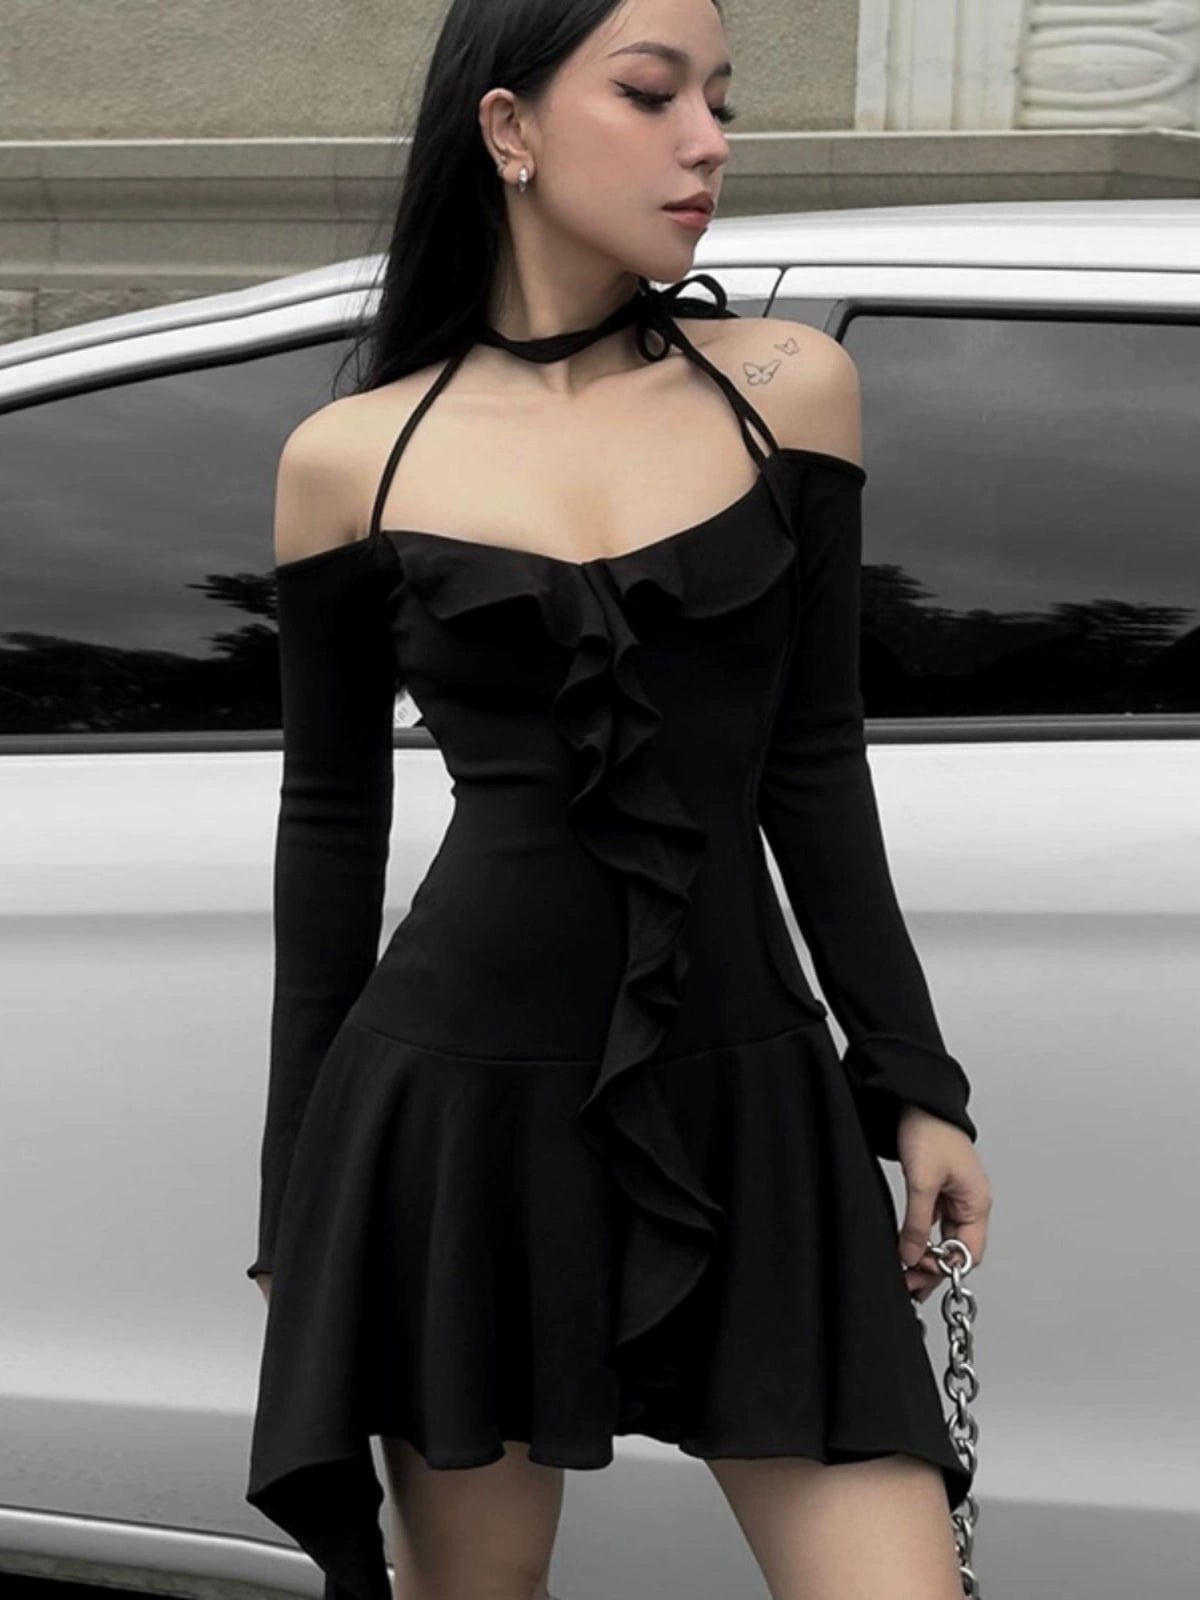 Cap Point Valeria Pure Desire Asymmetrical Design Halterneck Dress